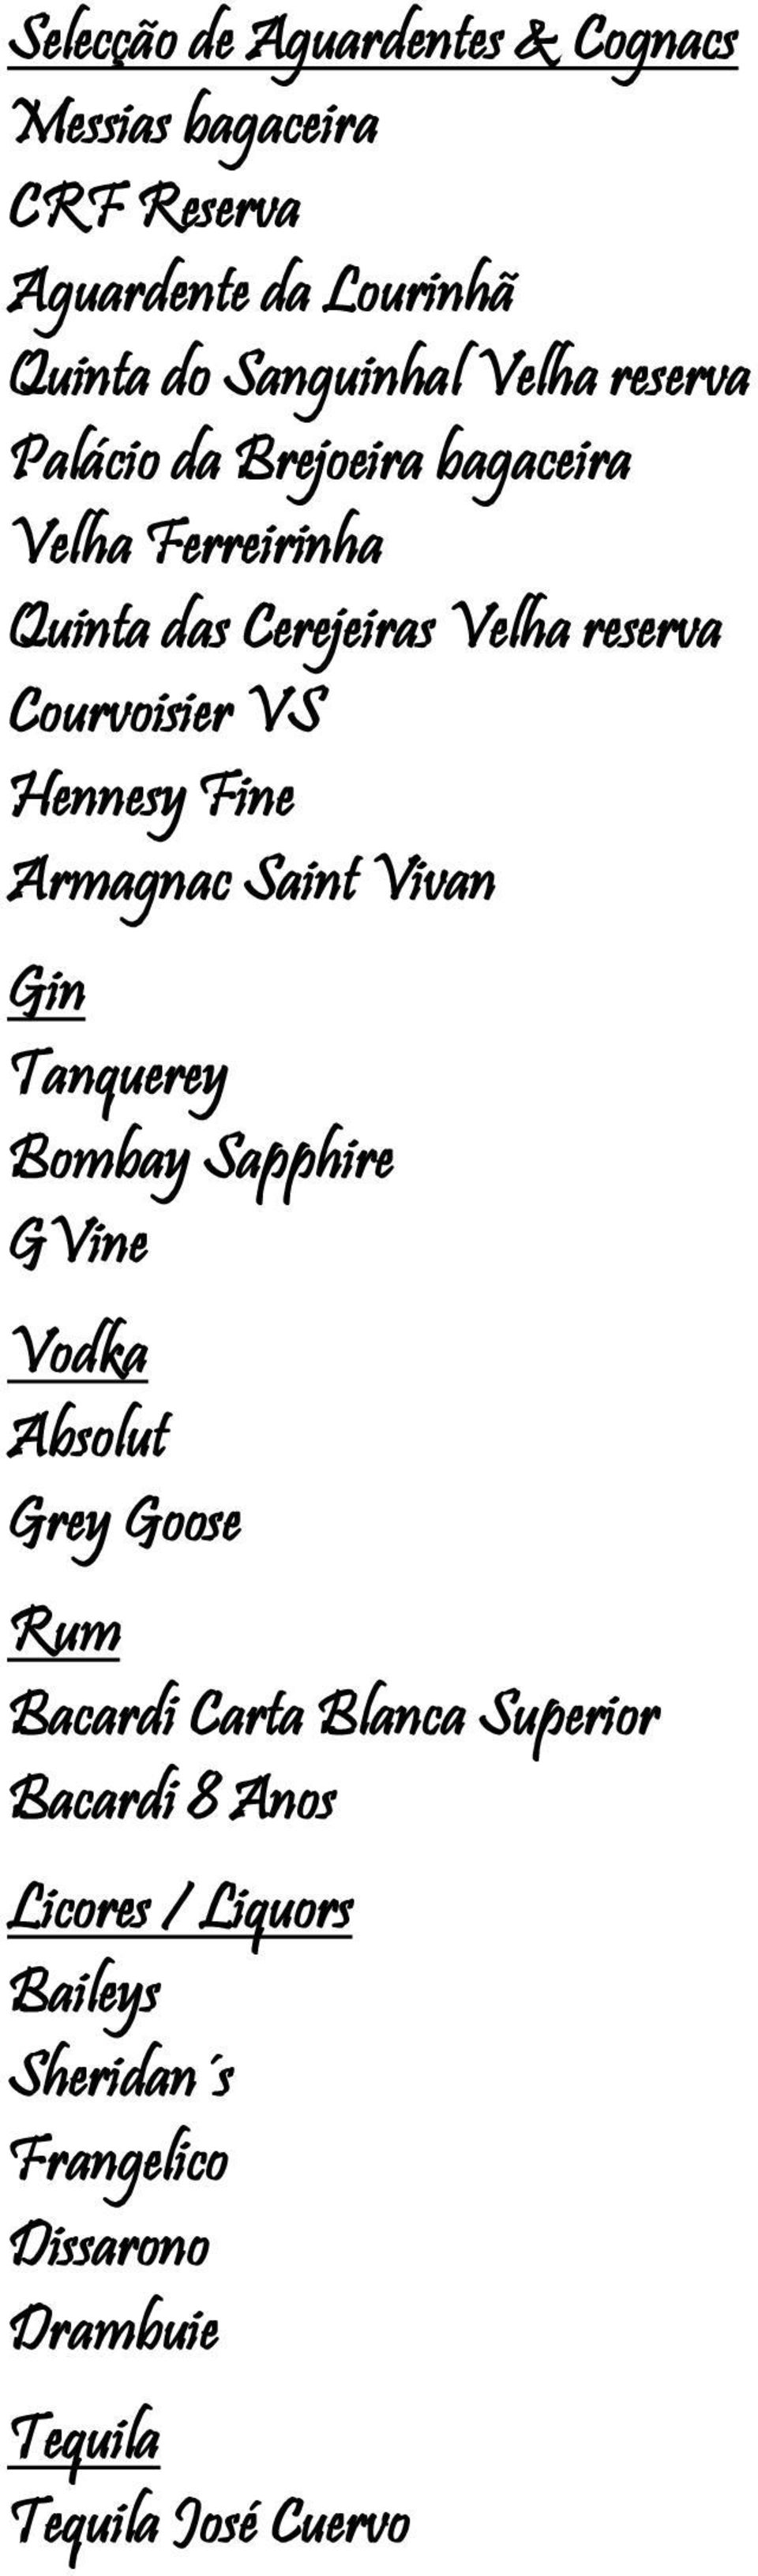 Hennesy Fine Armagnac Saint Vivan Gin Tanquerey Bombay Sapphire GVine Vodka Absolut Grey Goose Rum Bacardi Carta